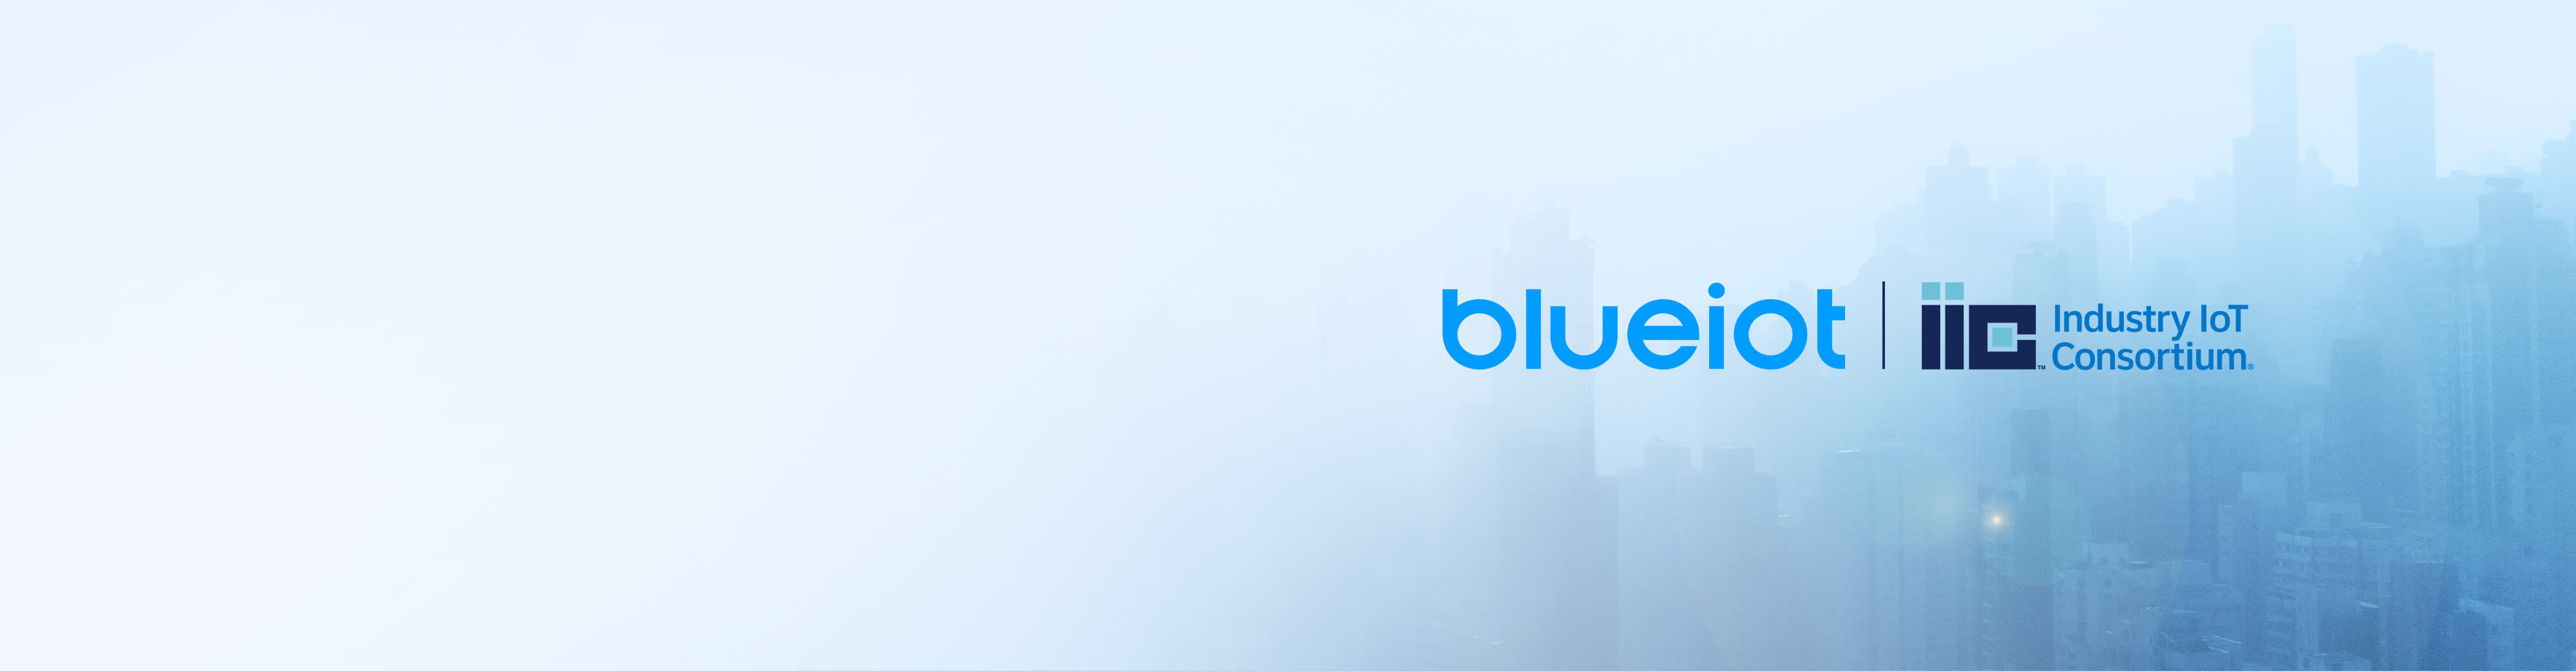 Blueiot Joins the Industry IoT Consortium